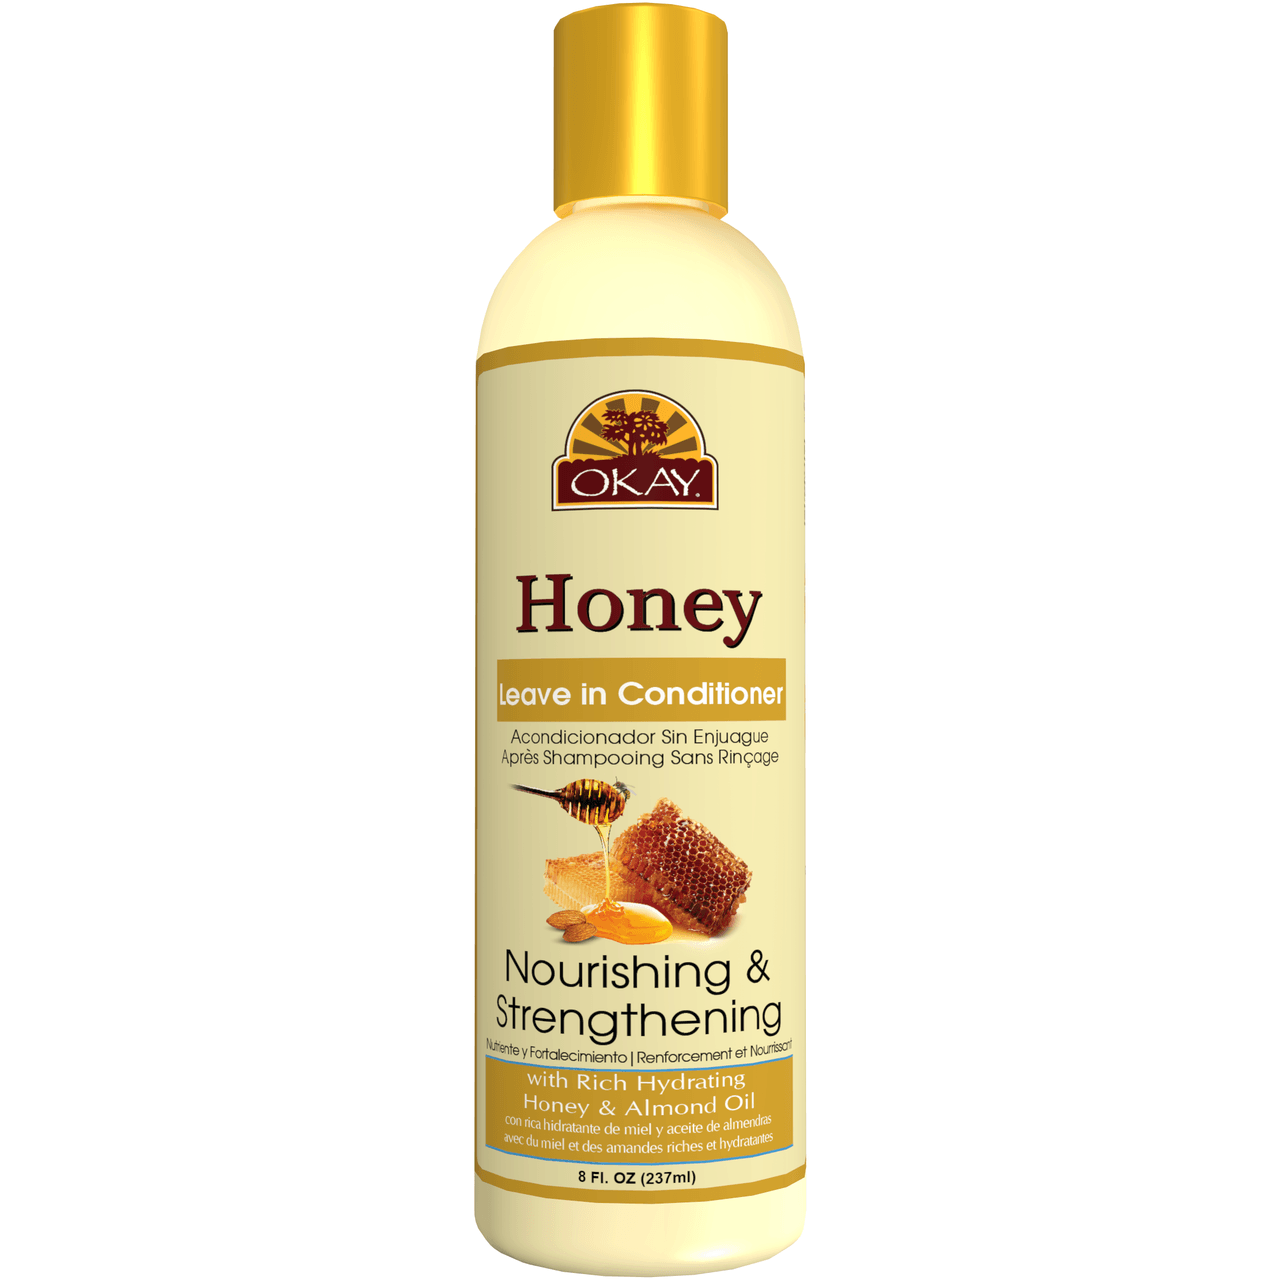 Okay Honey Nourishing & Strengthening Leave-In Conditioner, 8oz